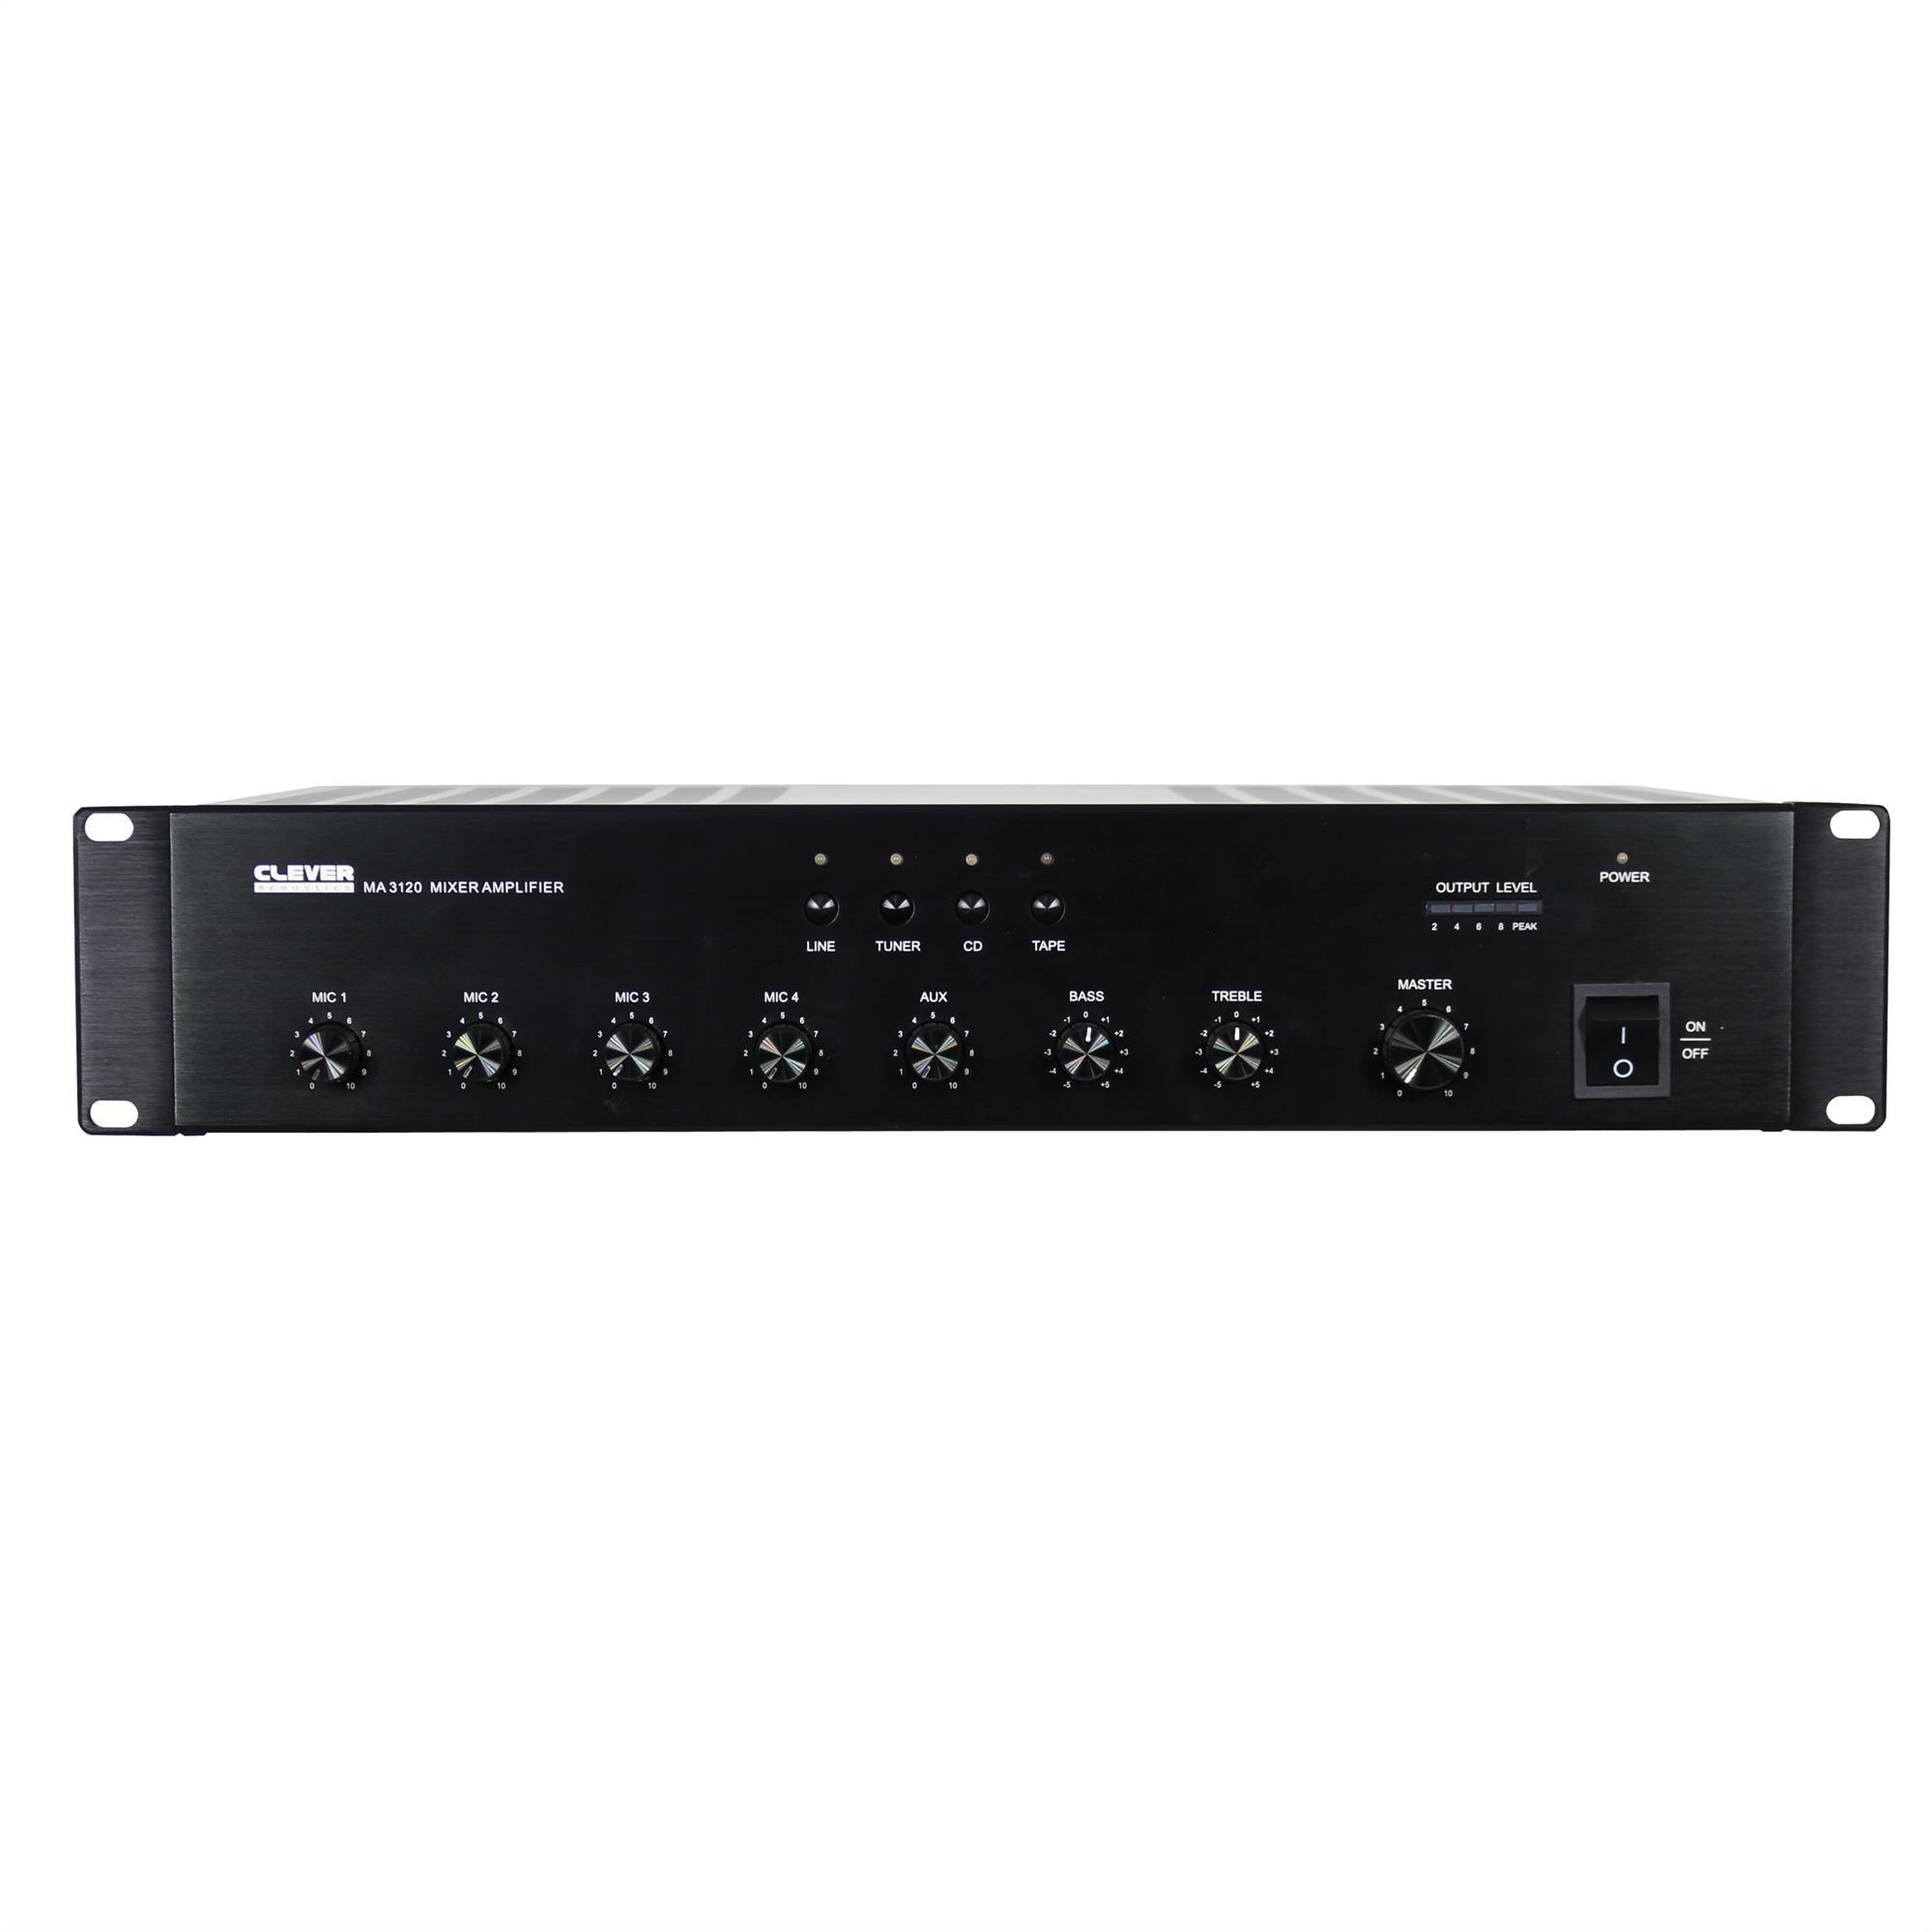 Clever Acoustics MA 3120 100v 120w Mixer Amplifier - DY Pro Audio